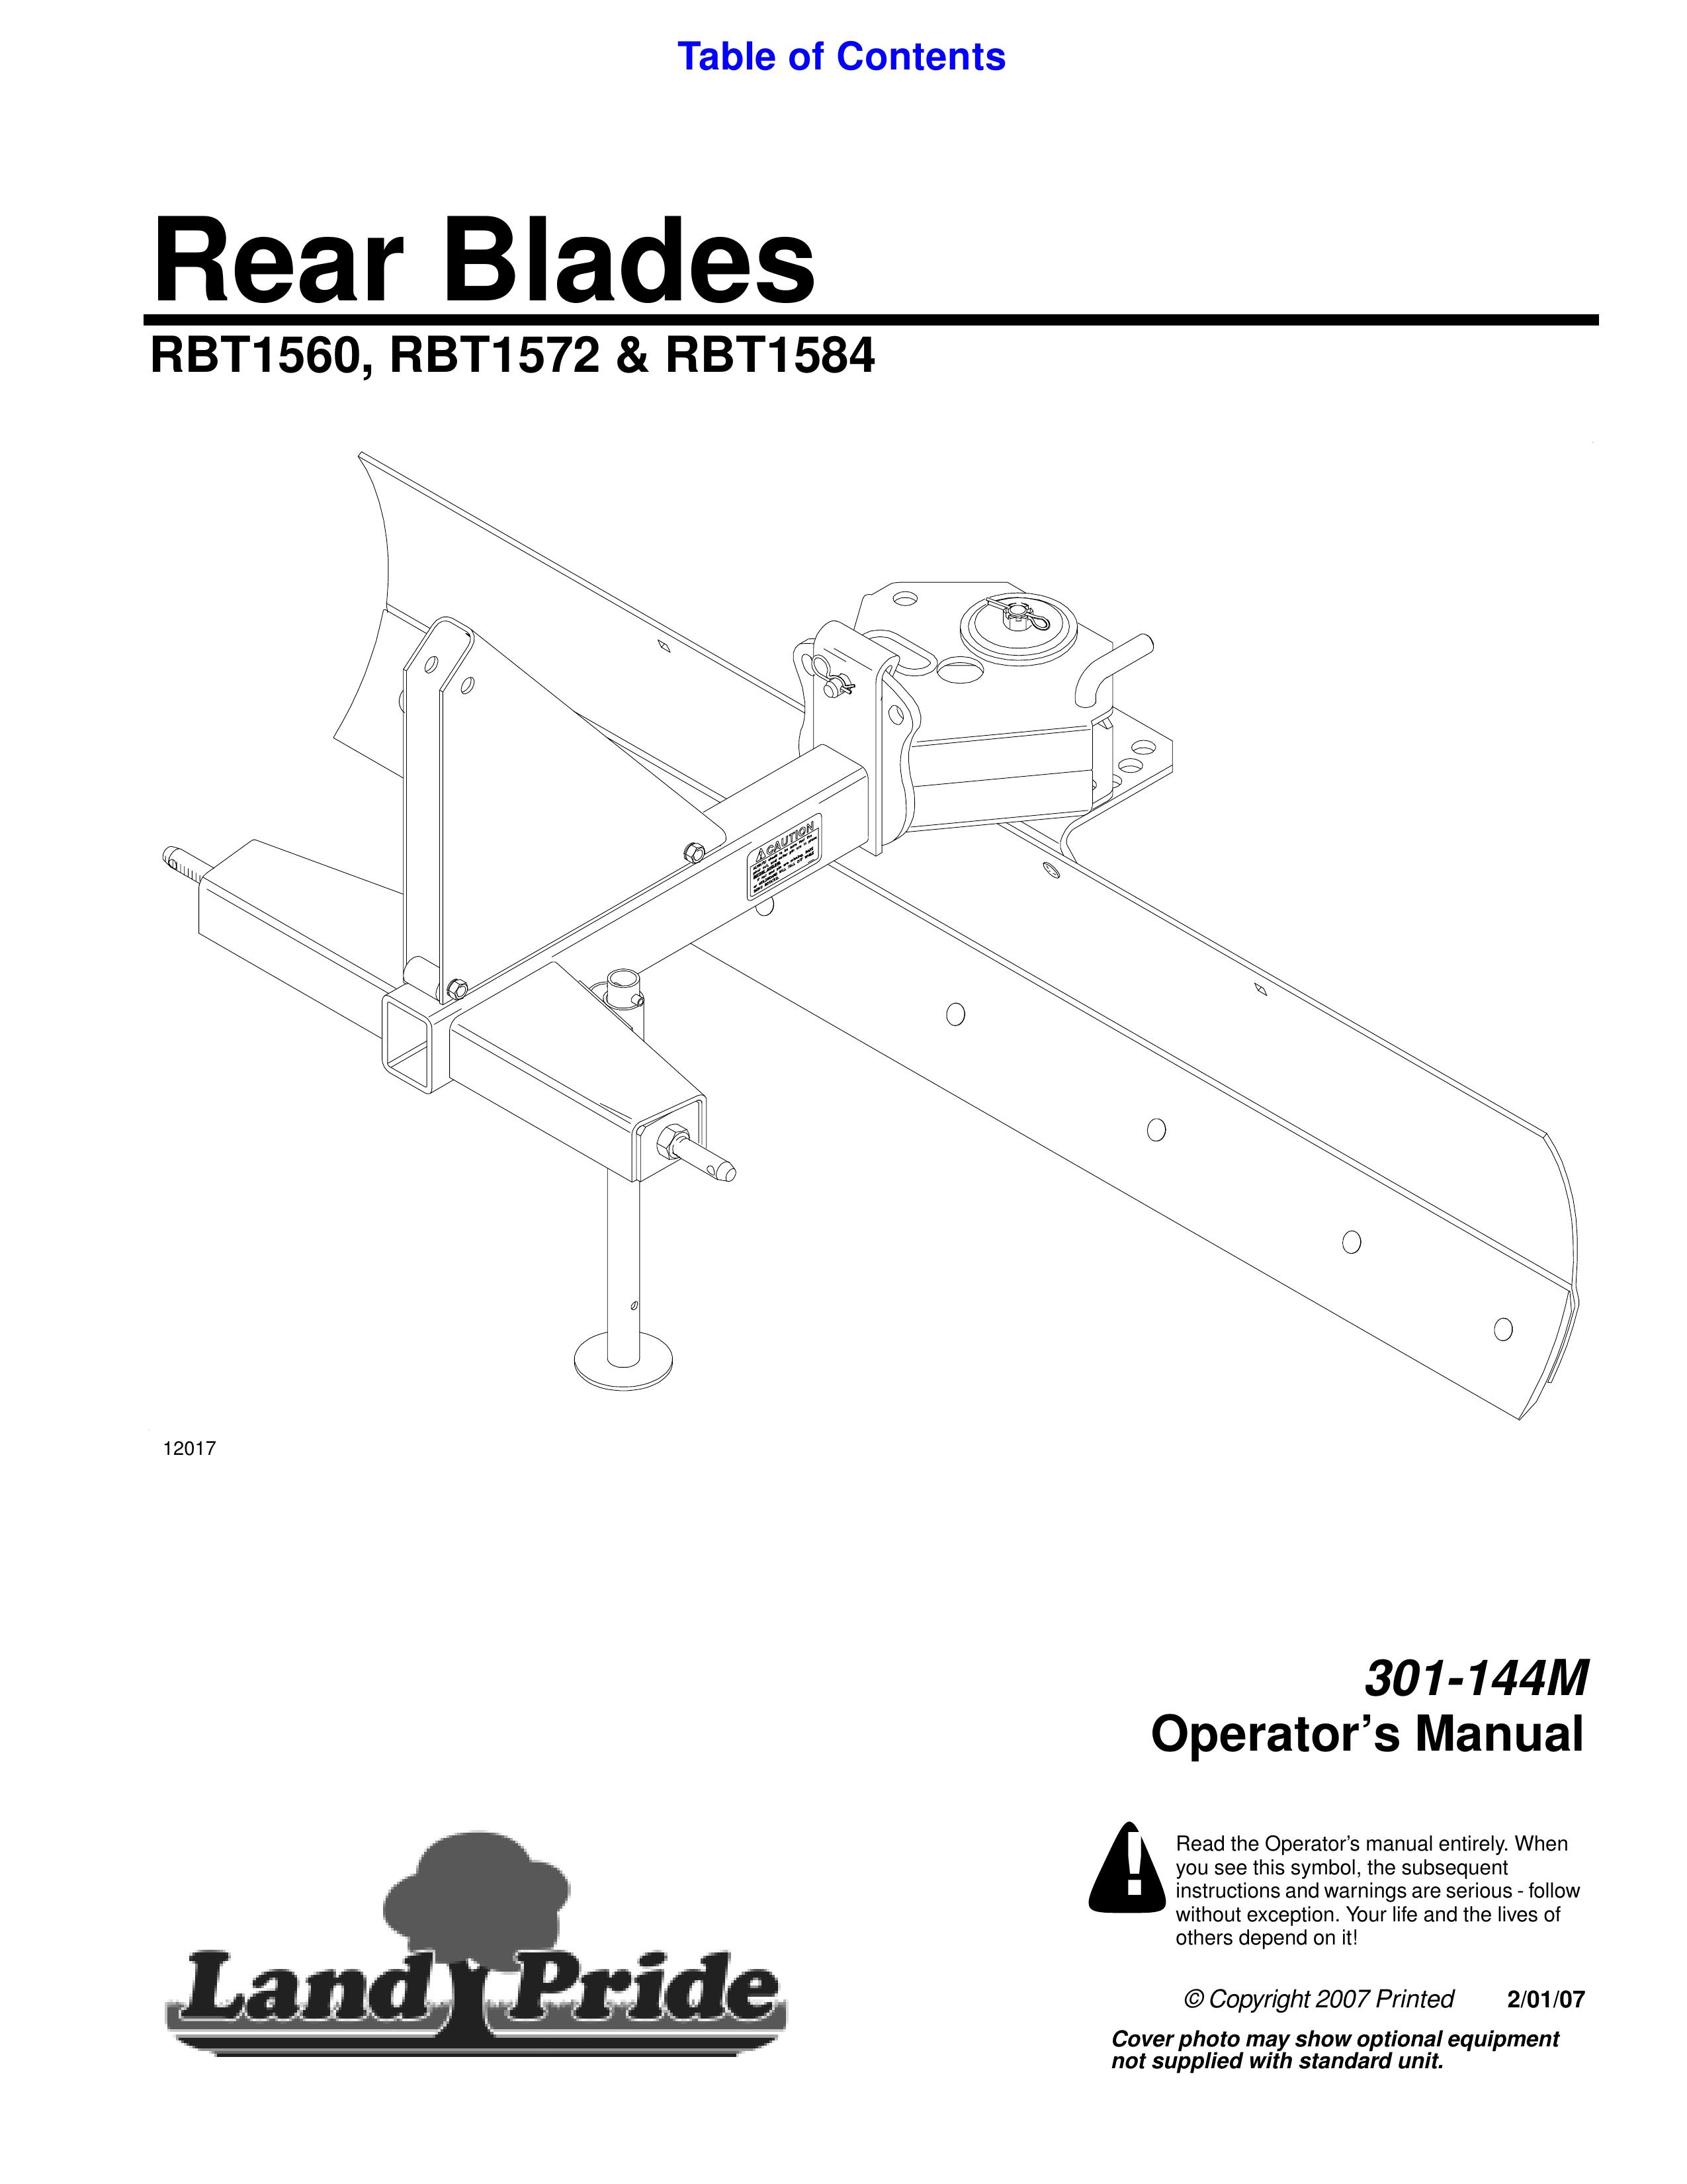 Land Pride Rear Blades Lawn Mower Accessory User Manual